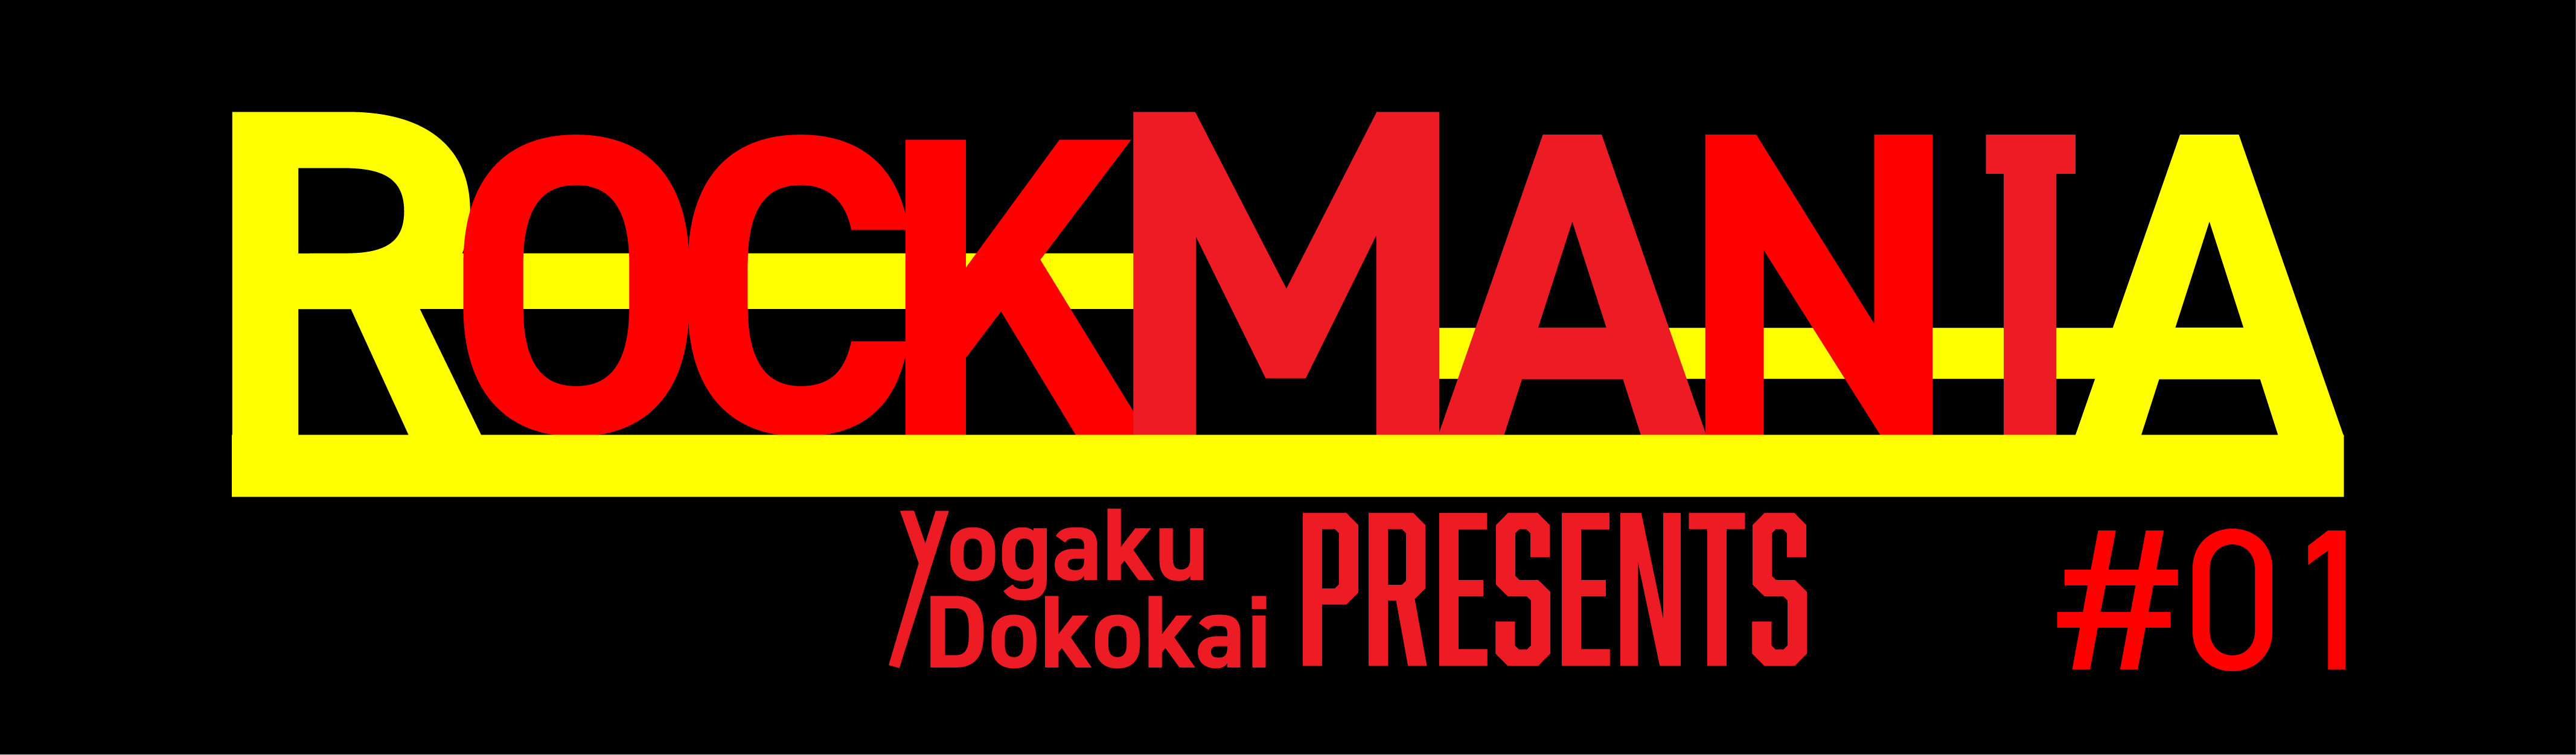 Yogaku Dokokai presents ROCK MANIA #01 開催決定!!